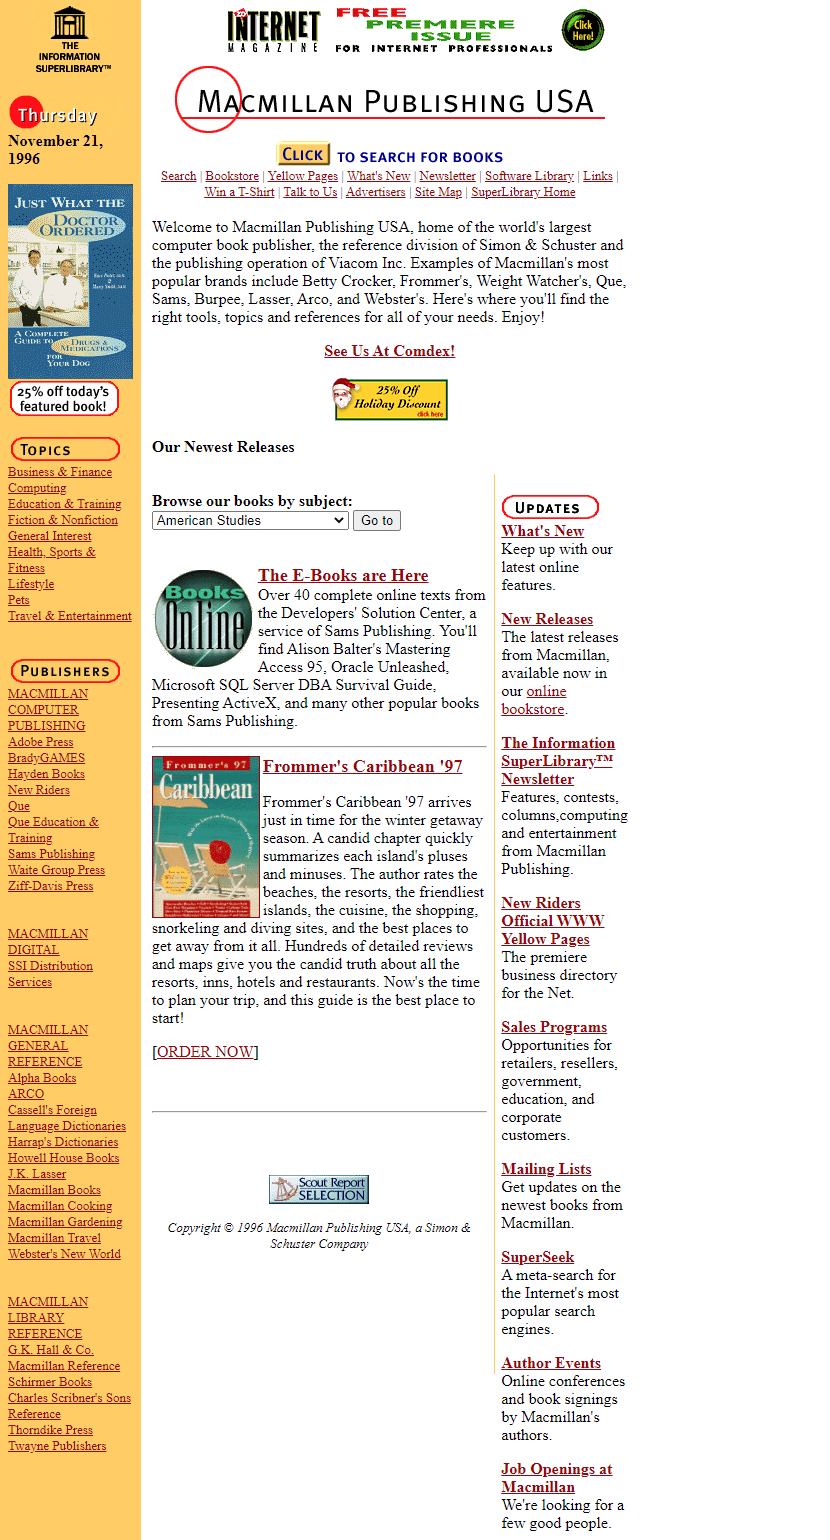 Macmillan Publishing USA website in 1996